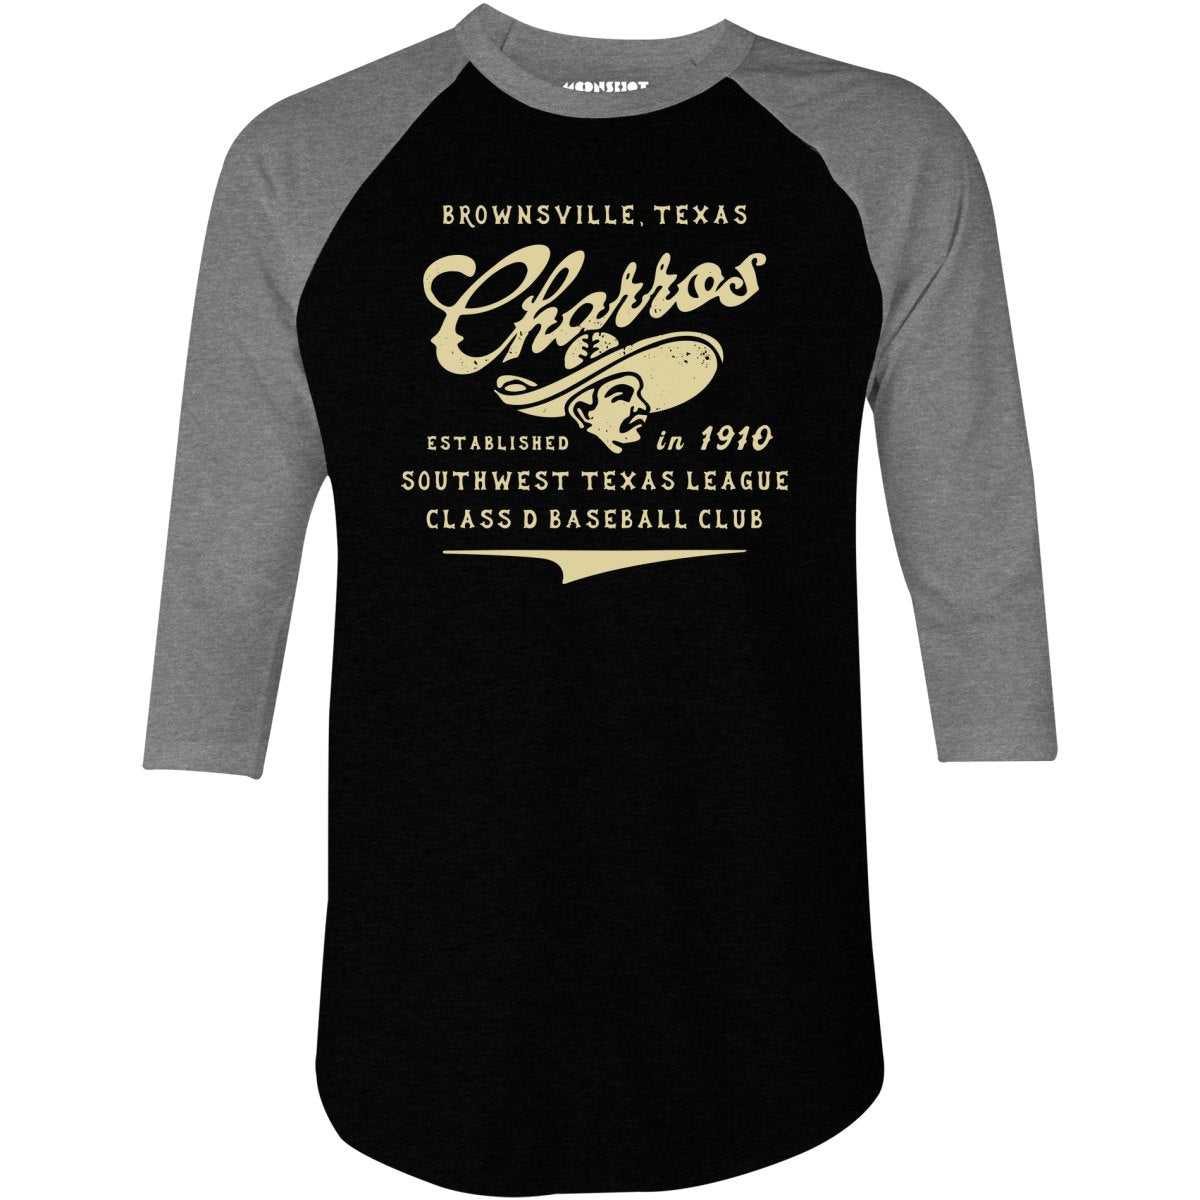 Brownsville Charros - Texas - Vintage Defunct Baseball Teams - 3/4 Sleeve Raglan T-Shirt